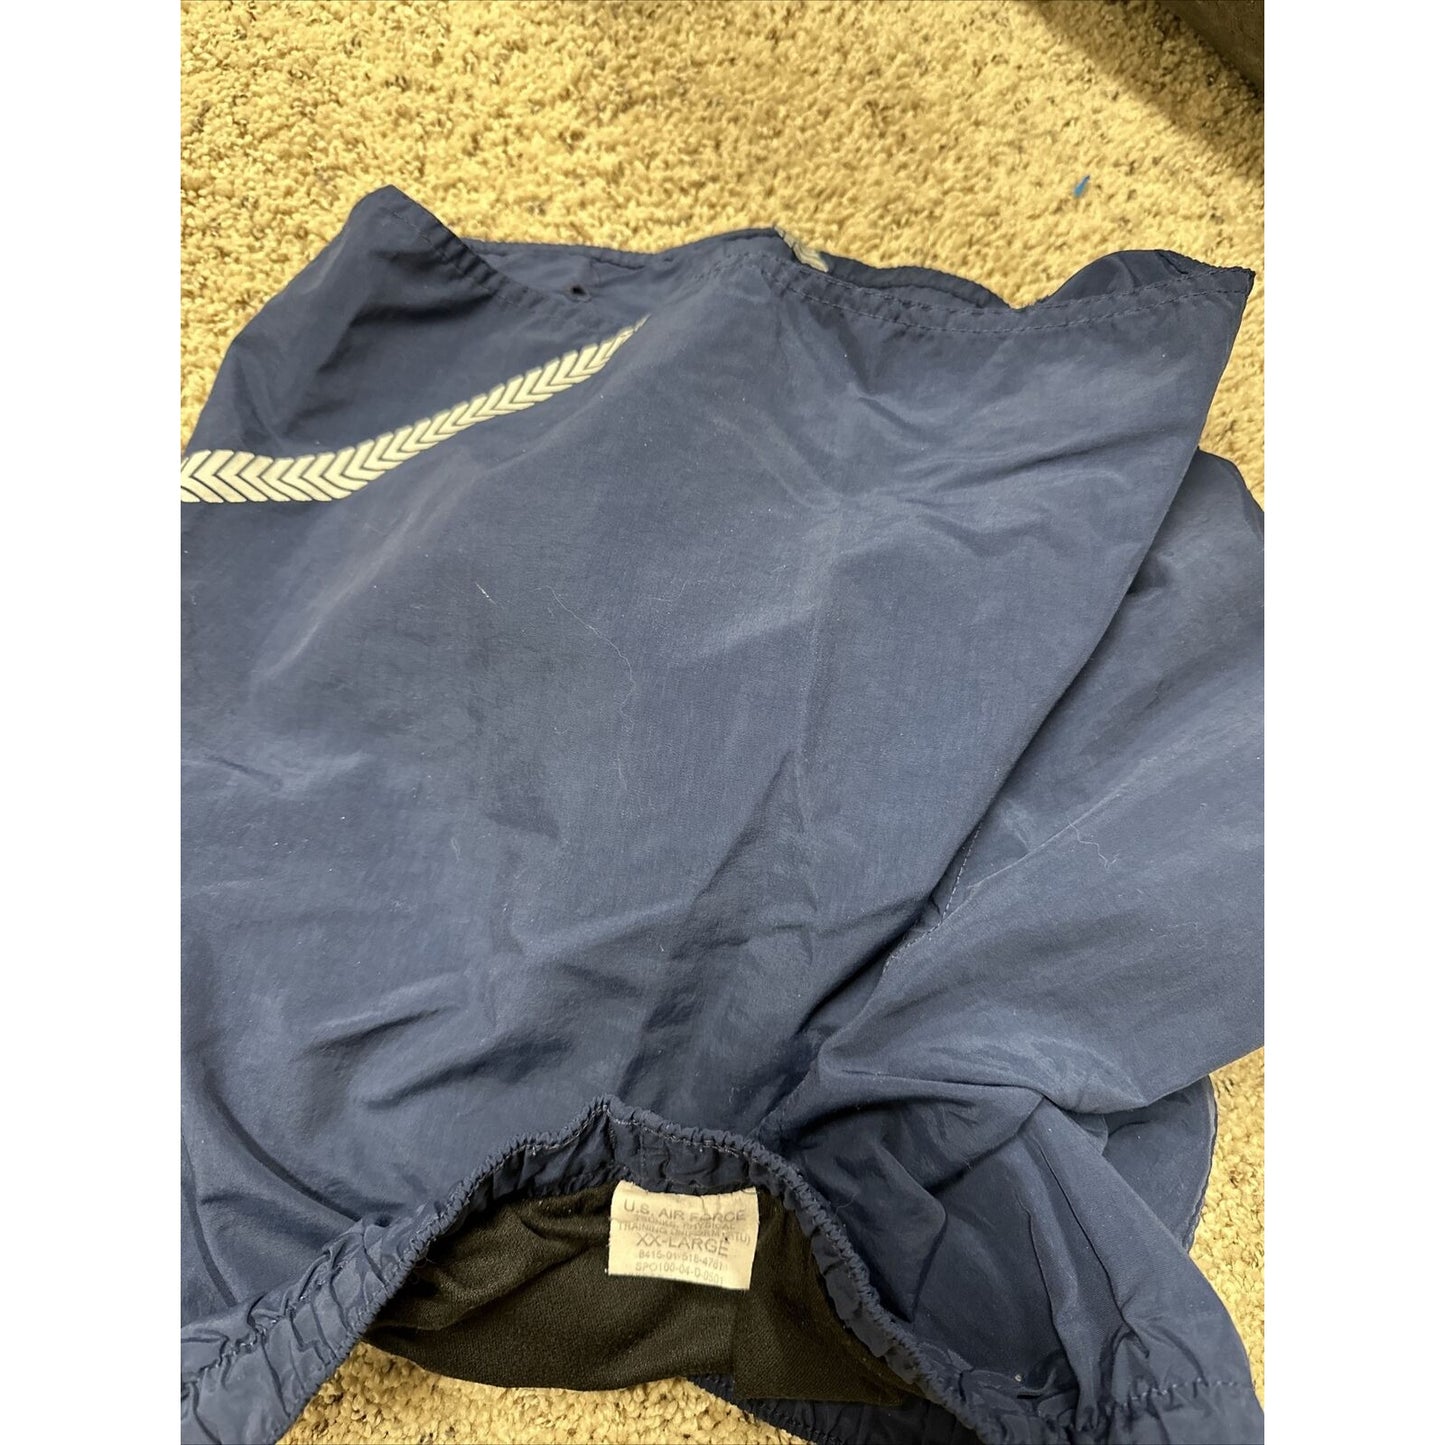 Air Force Mens Shorts Trunks Physical Training Uniform PTU Size XX Large 2X Blue